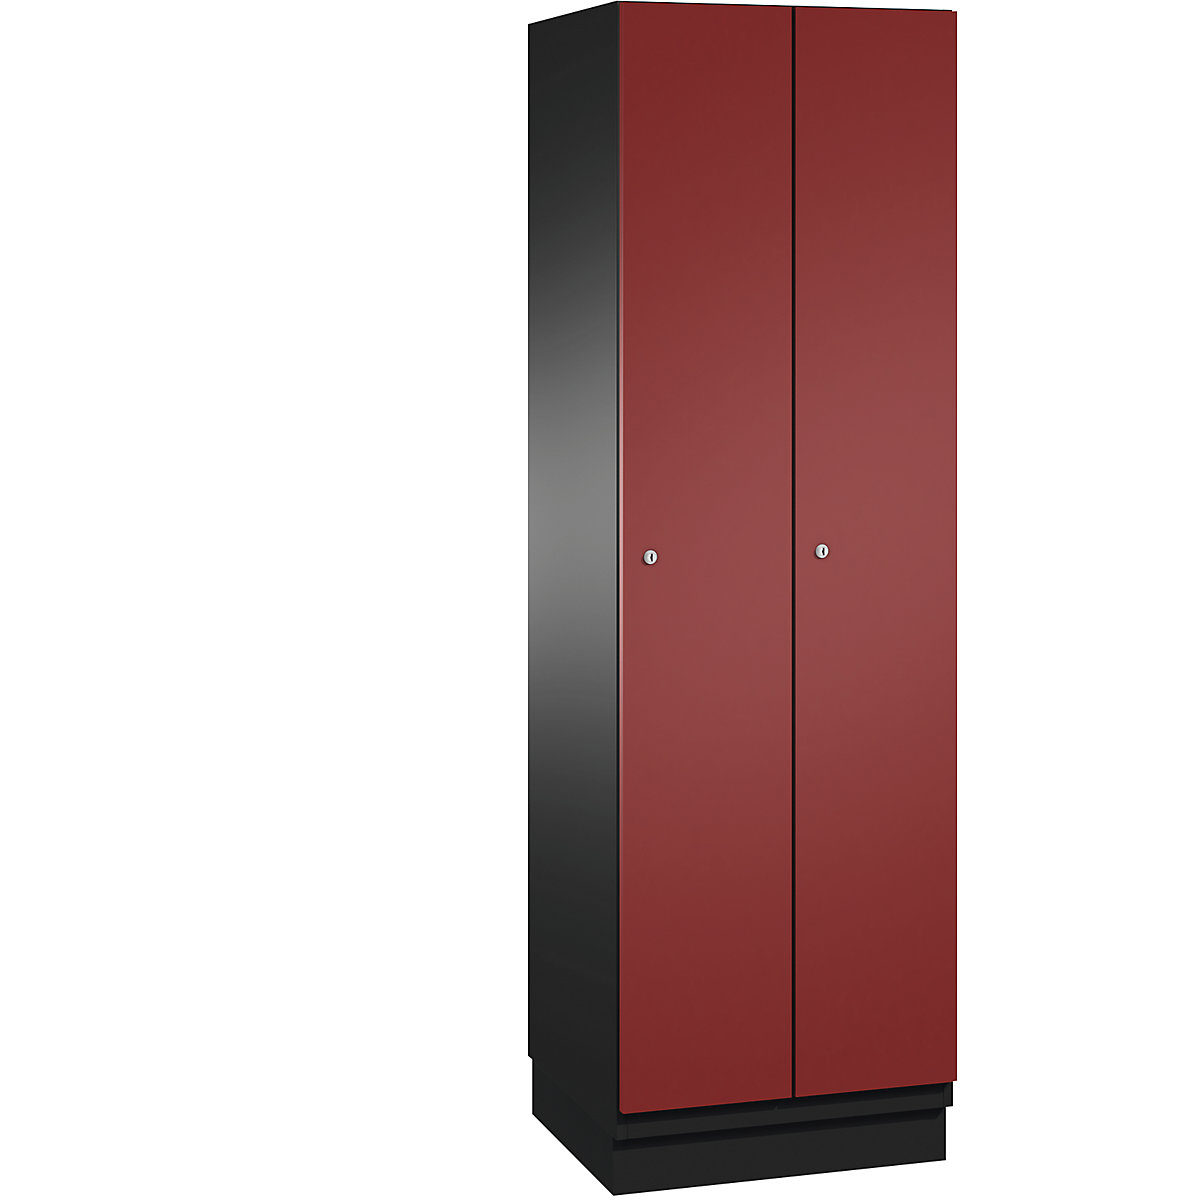 CAMBIO cloakroom locker with sheet steel doors – C+P, 2 compartments, 600 mm wide, body black grey / door ruby red-8